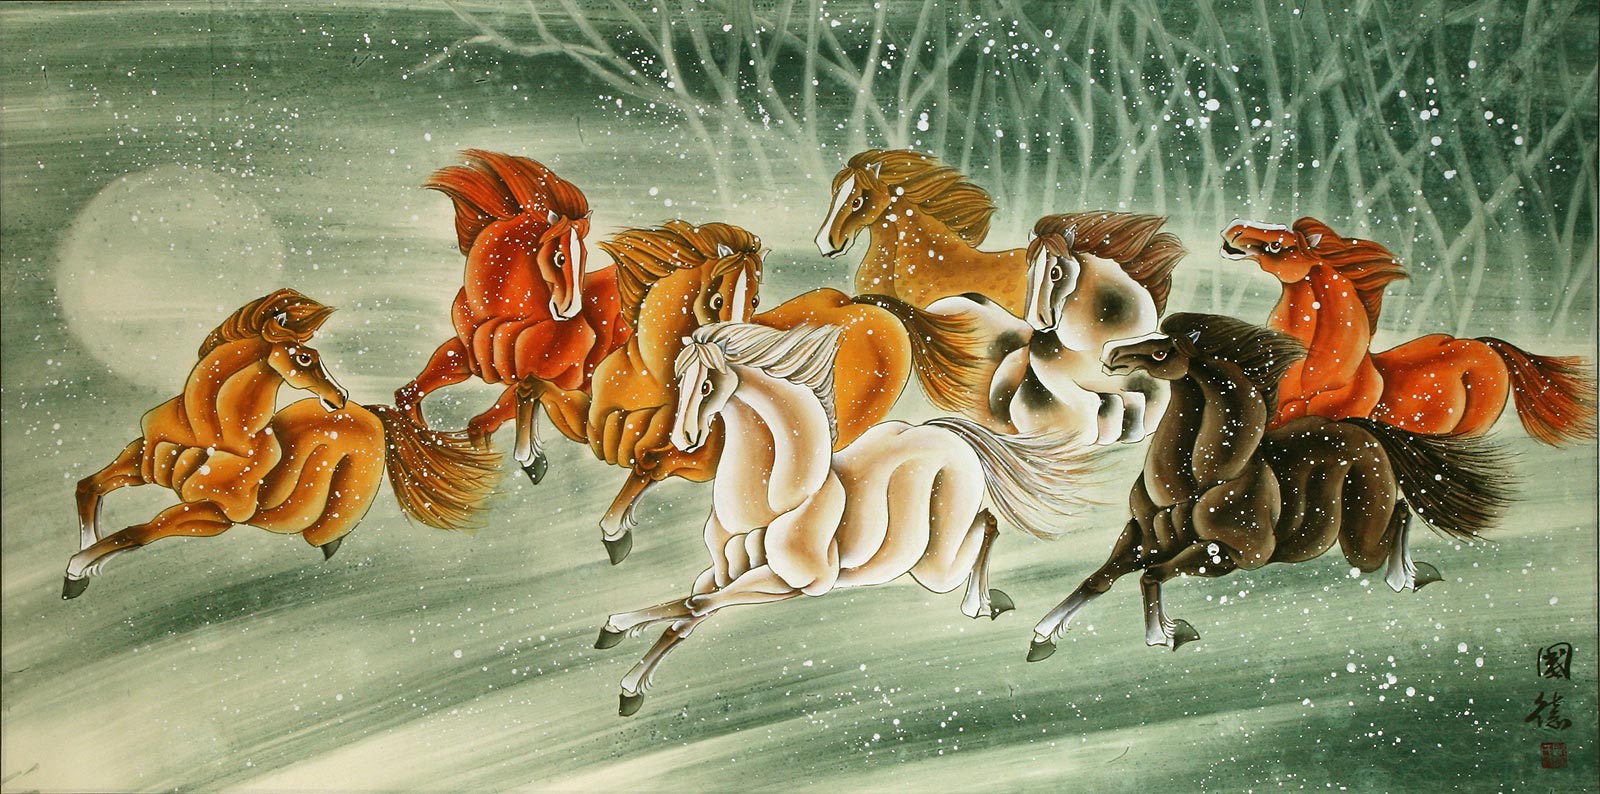 Running Horses - Large Chinese Painting